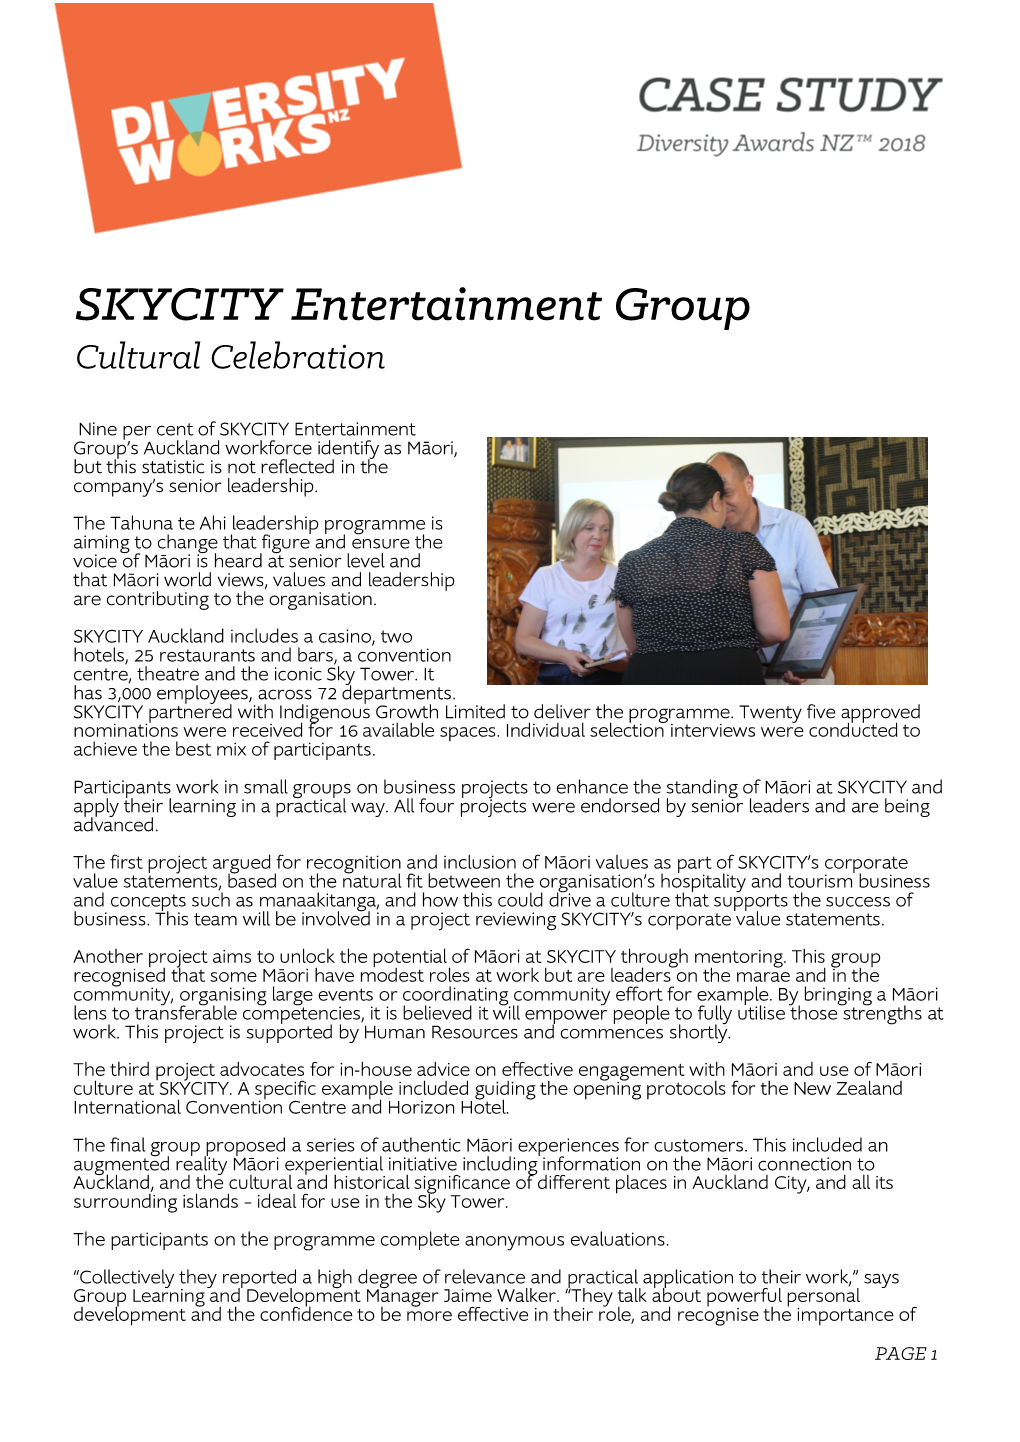 SKYCITY Entertainment Group Cultural Celebration